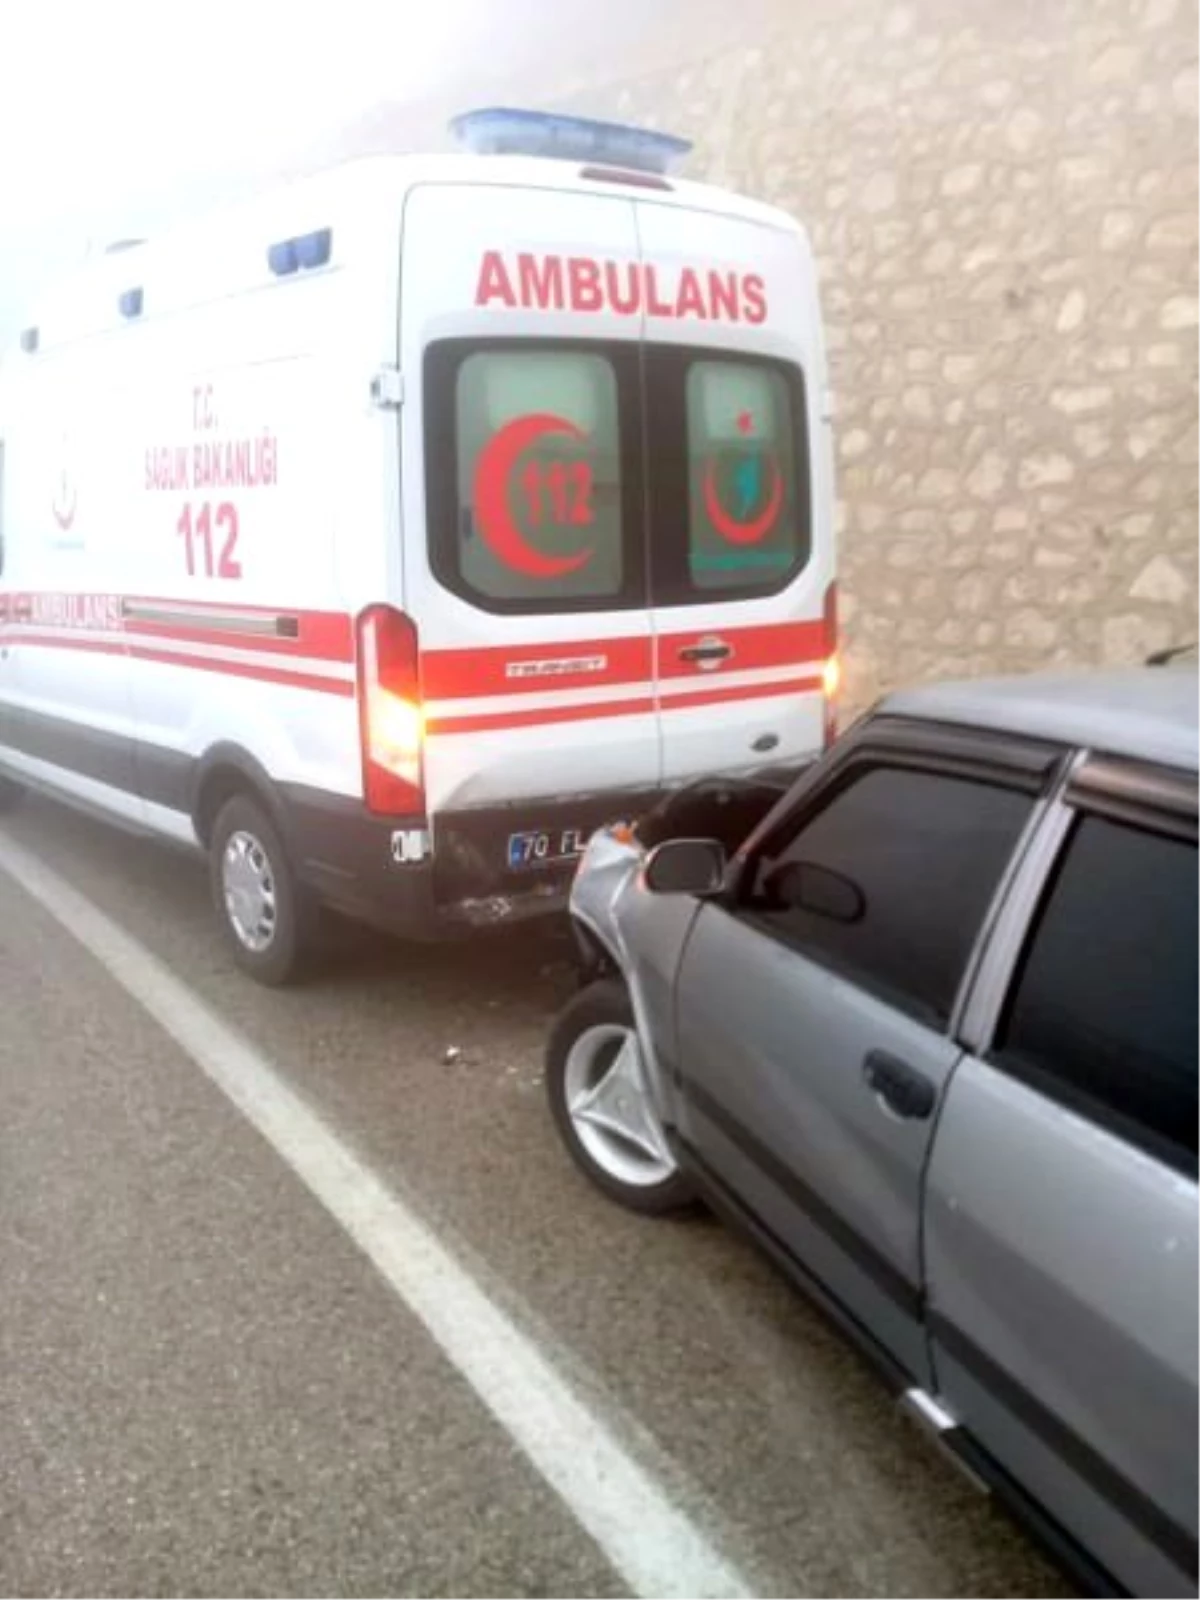 Yaralı taşıyan ambulansa kaza yaptı: 7 yaralı